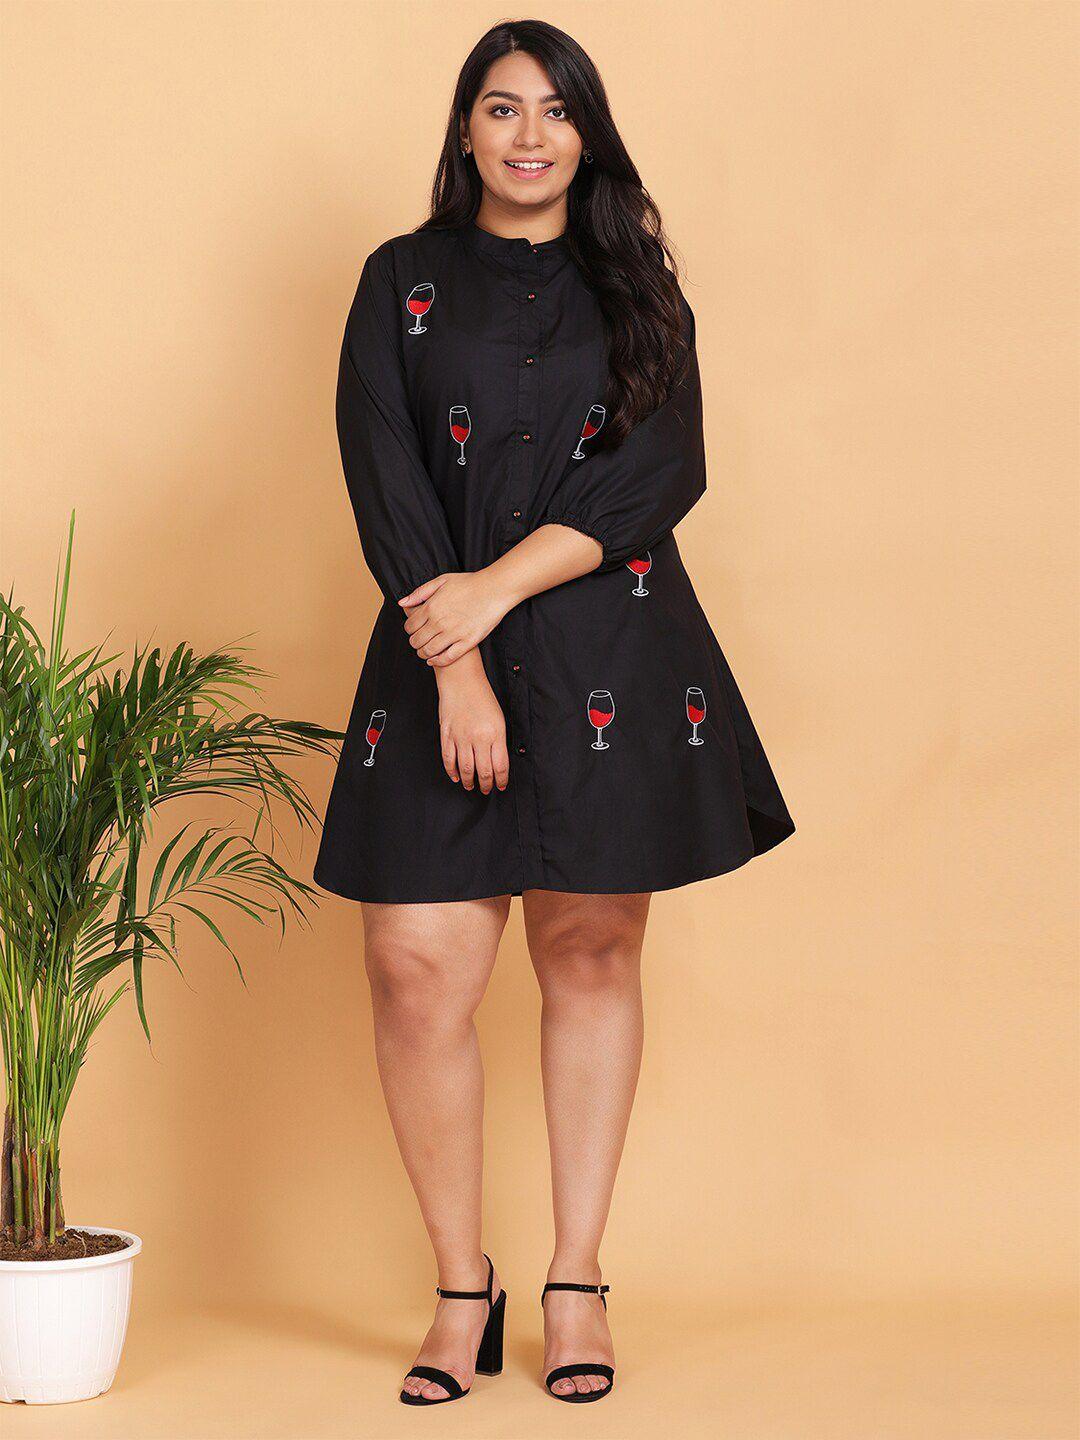 lastinch black embroidered shirt dress